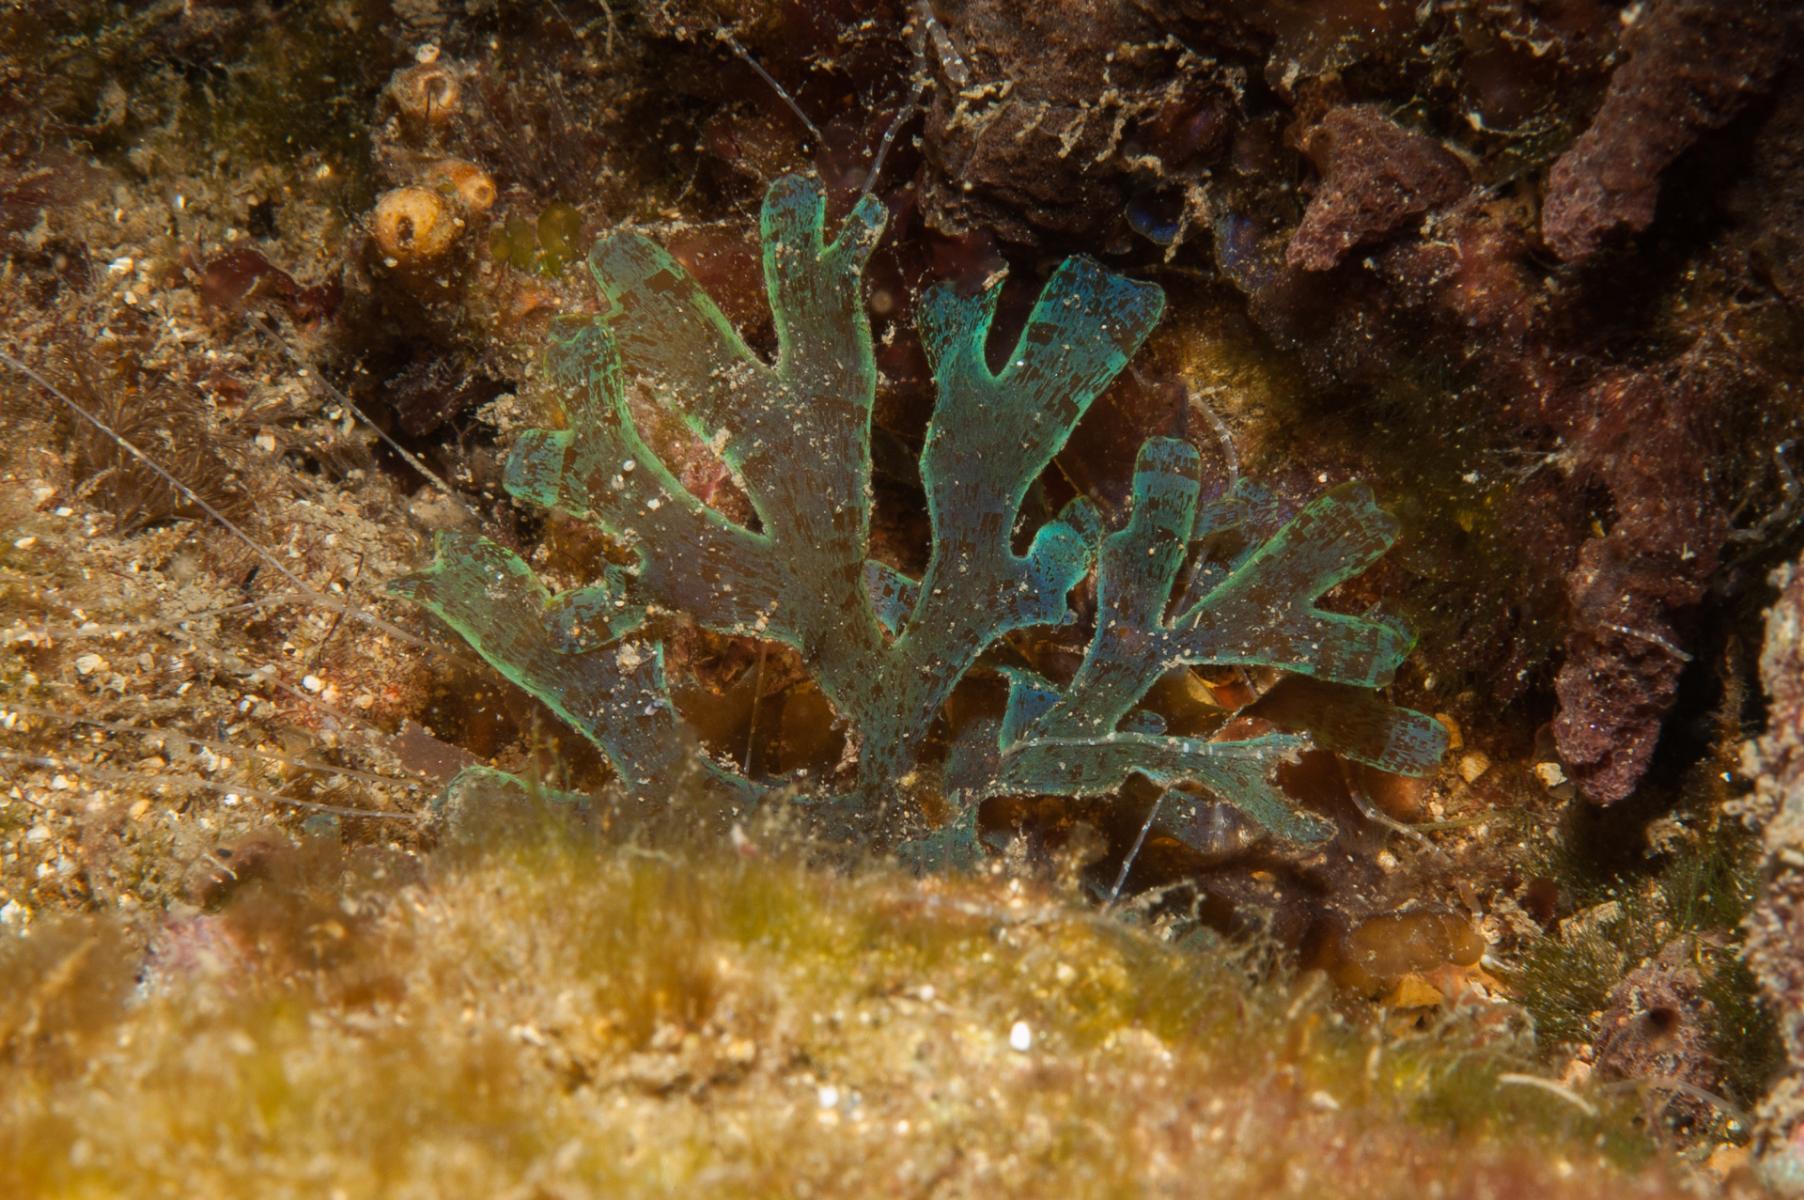 Dictyota sp.: brown seaweed